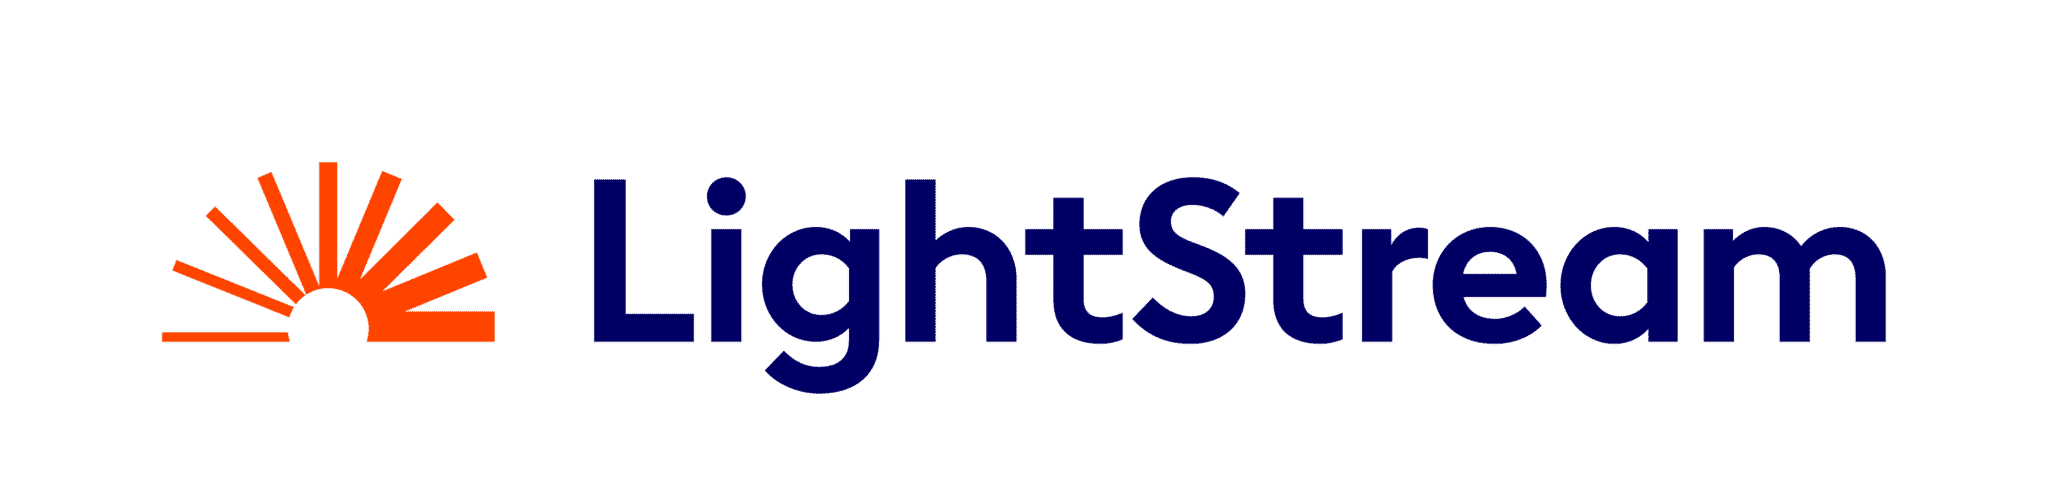 online loan companies: Lightstream